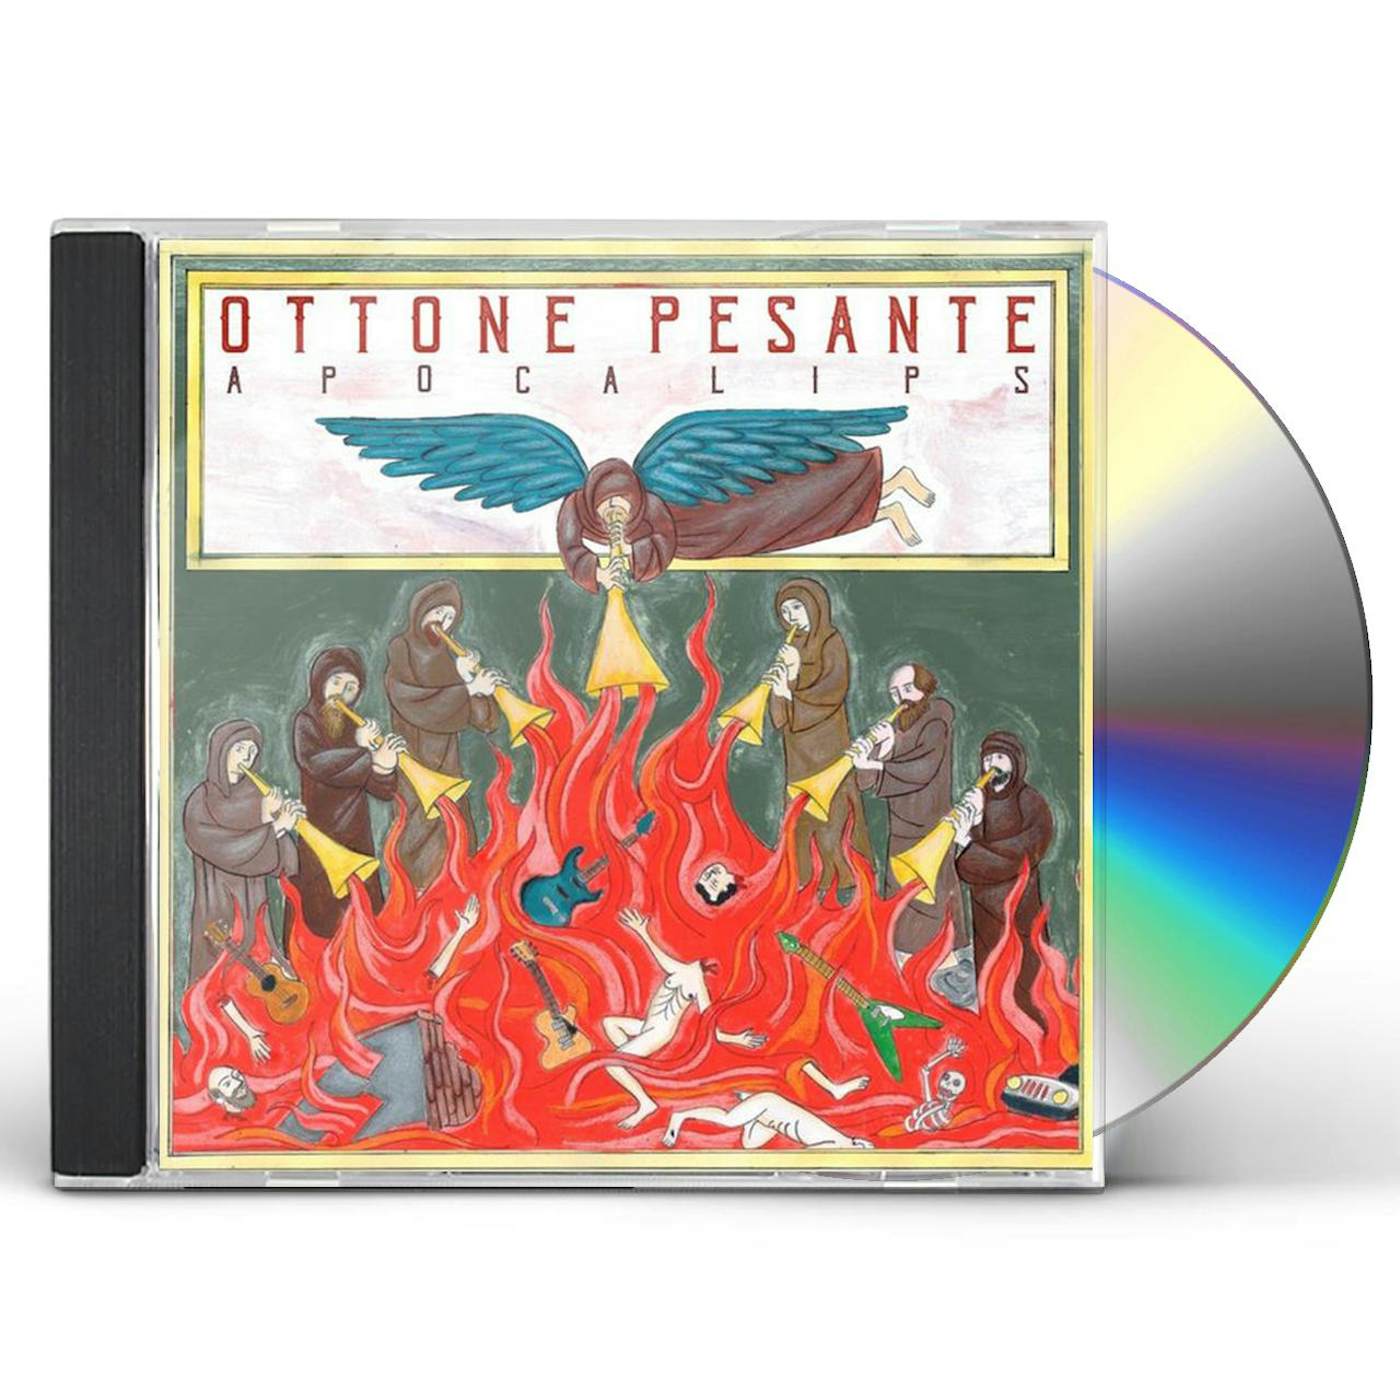 Ottone Pesante APOCALIPS CD